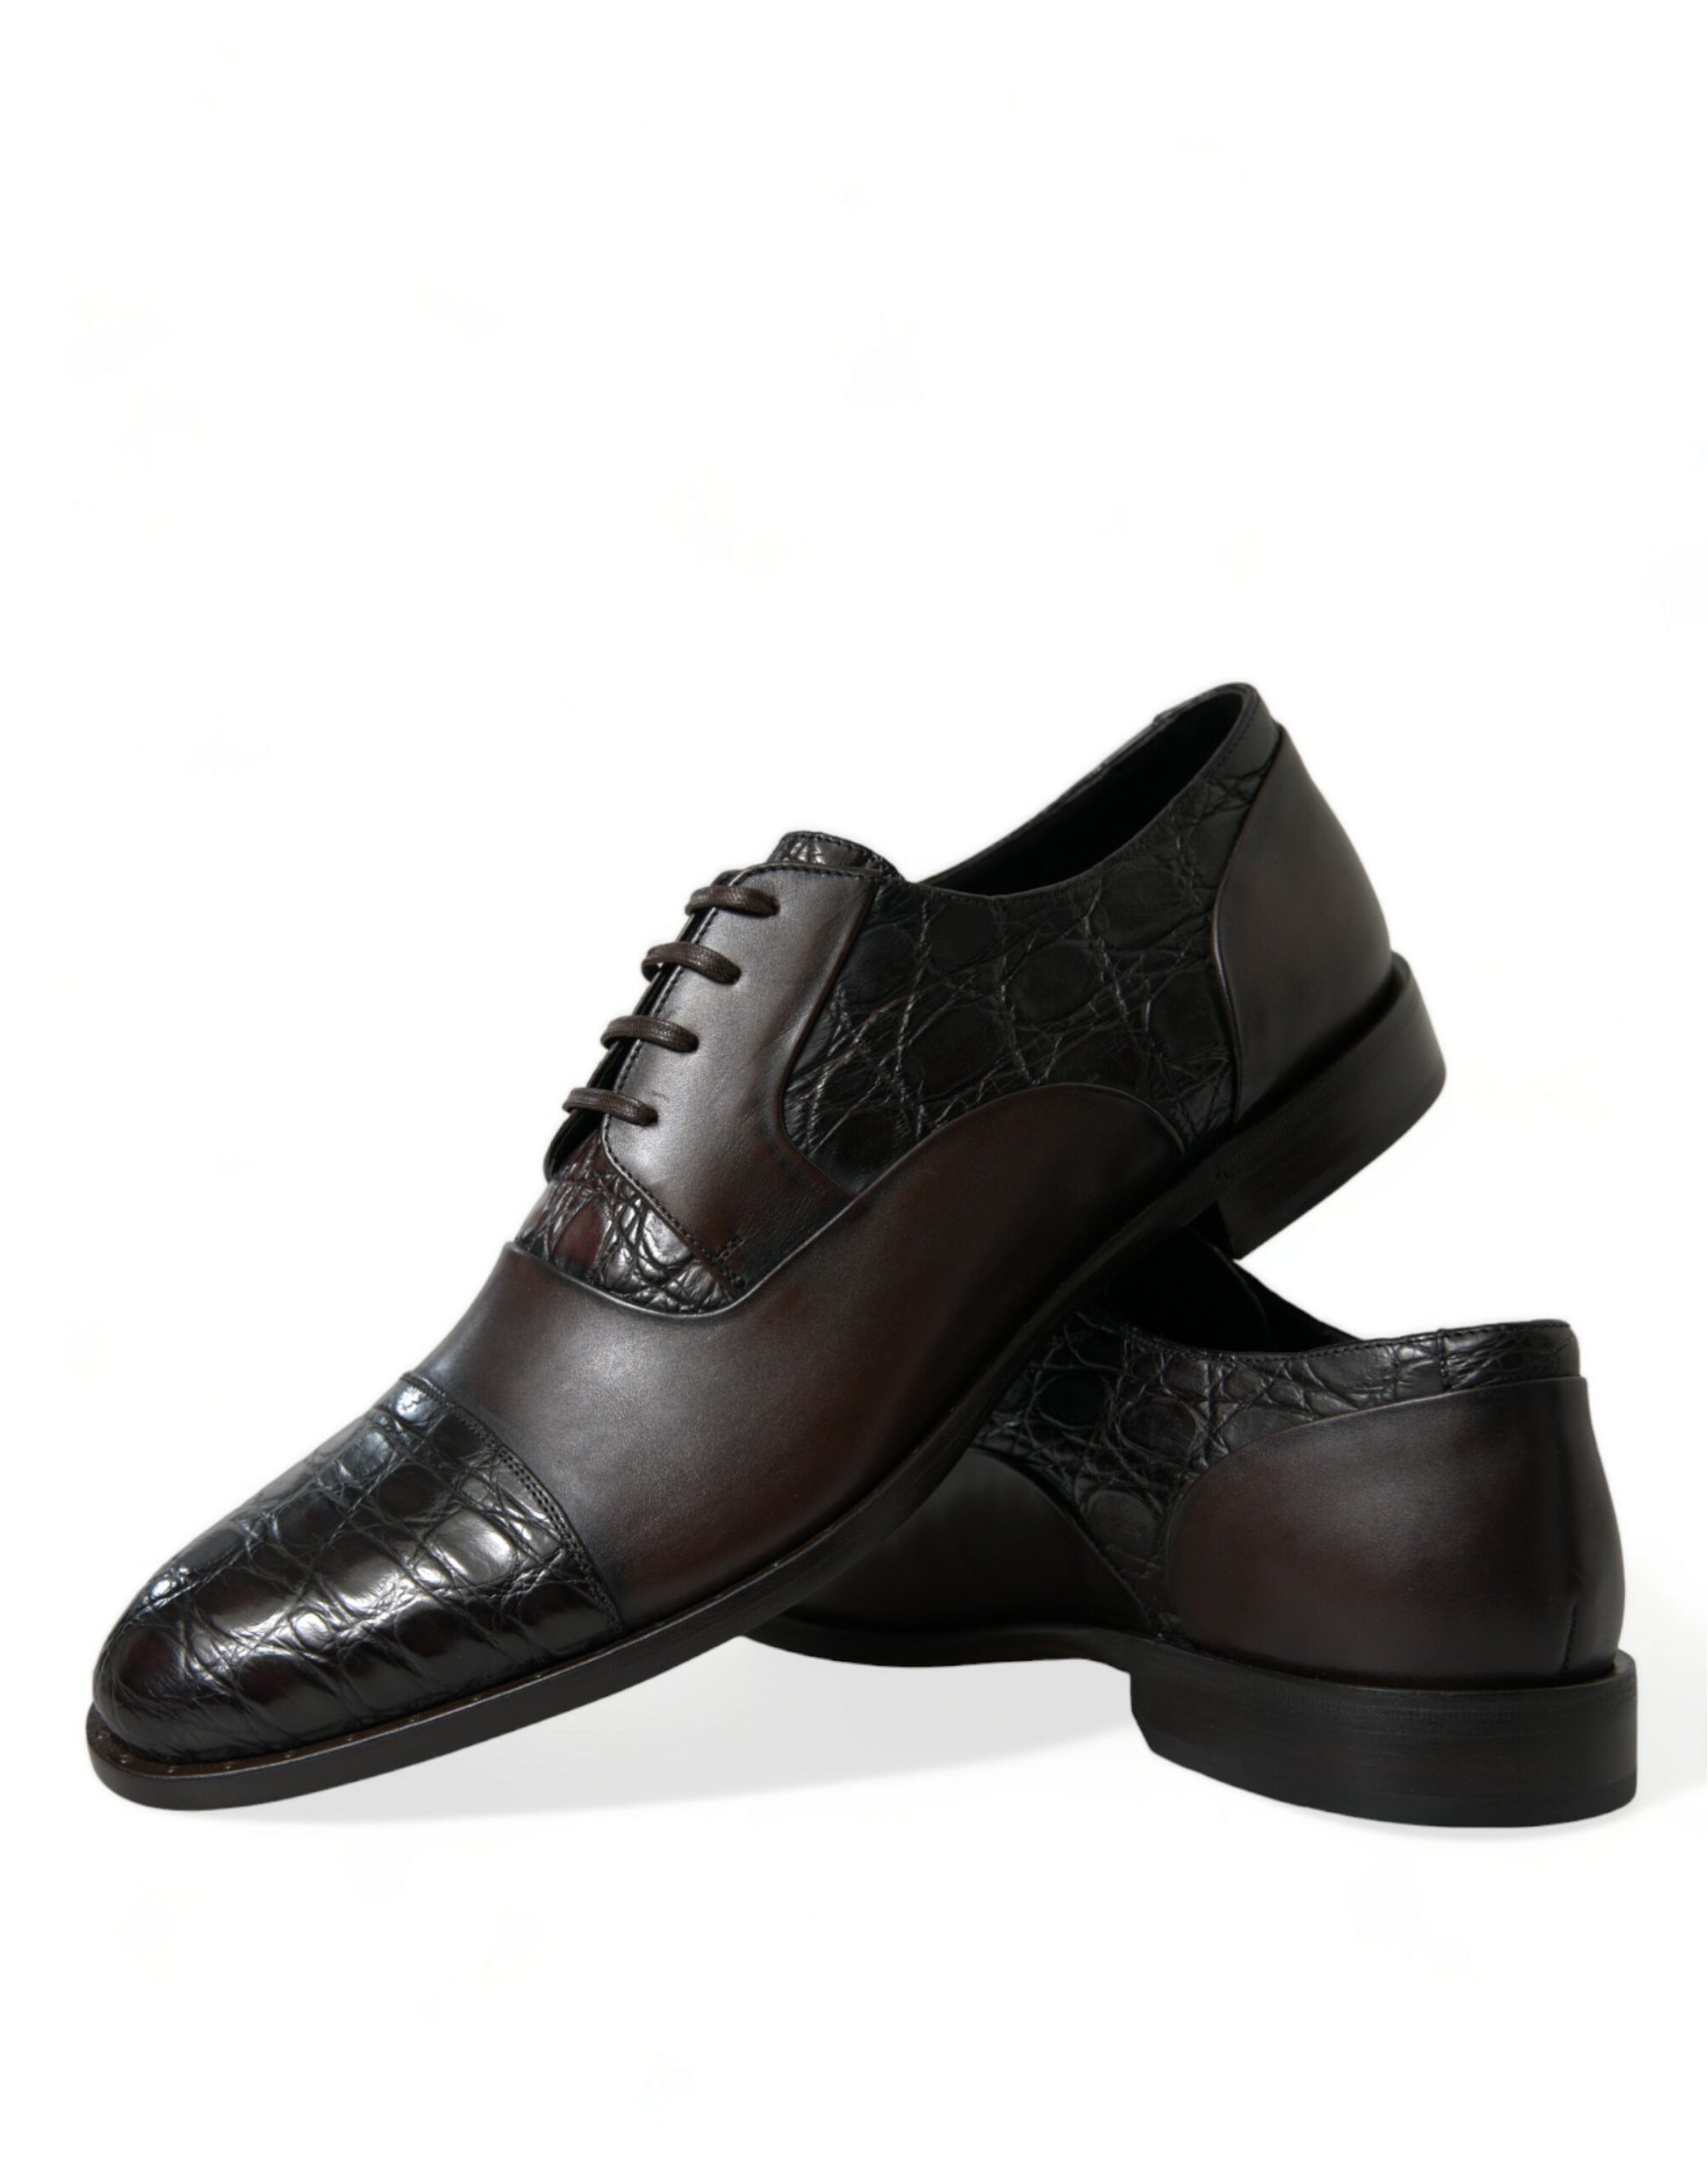 Fashionsarah.com Fashionsarah.com Dolce & Gabbana Brown Exotic Leather Formal Men Dress Shoes